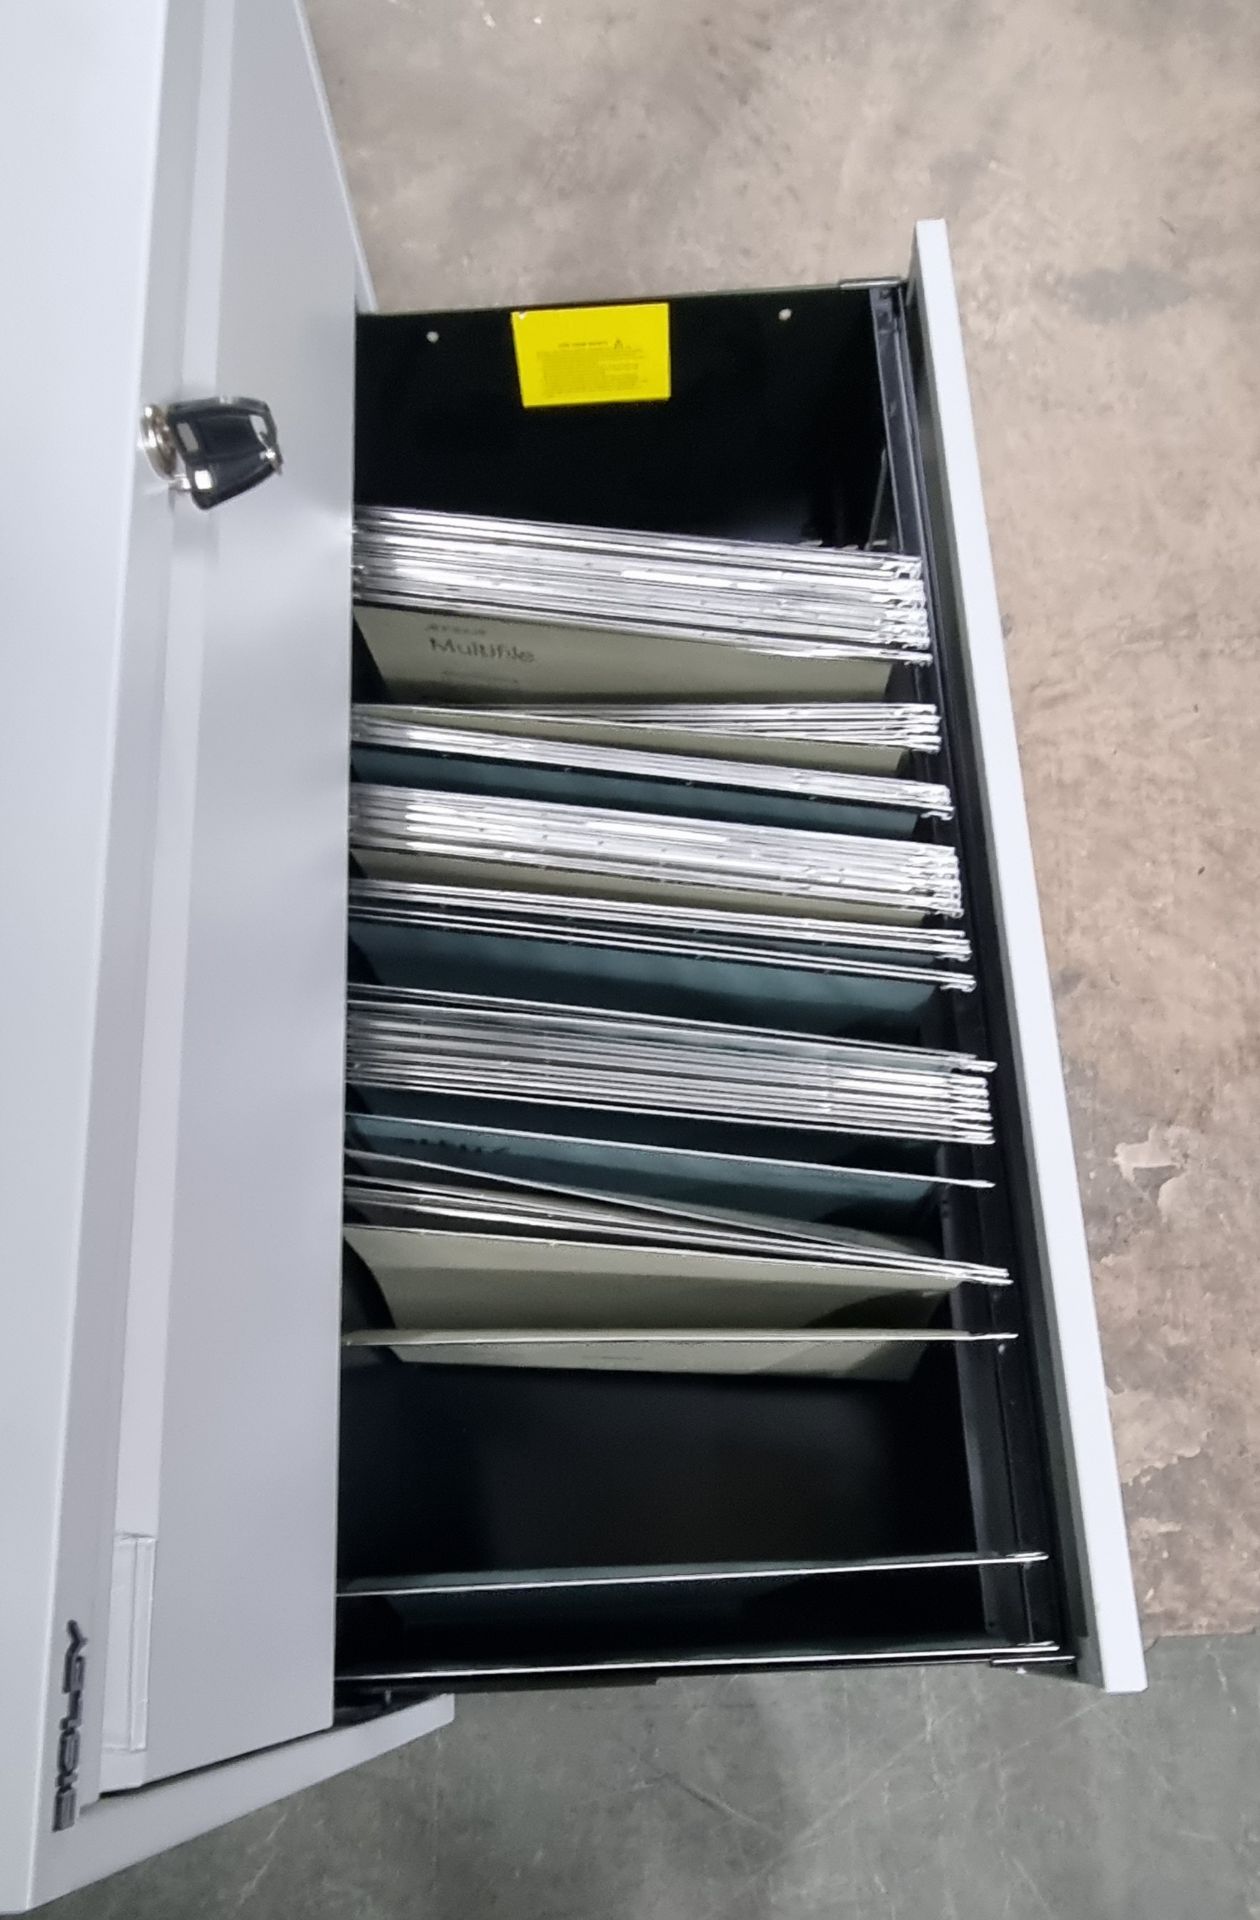 1 x Bisley 2 Drawer Filing Cabinet With Key Matt Grey 100mm x 690mm x 470mm - Image 6 of 9